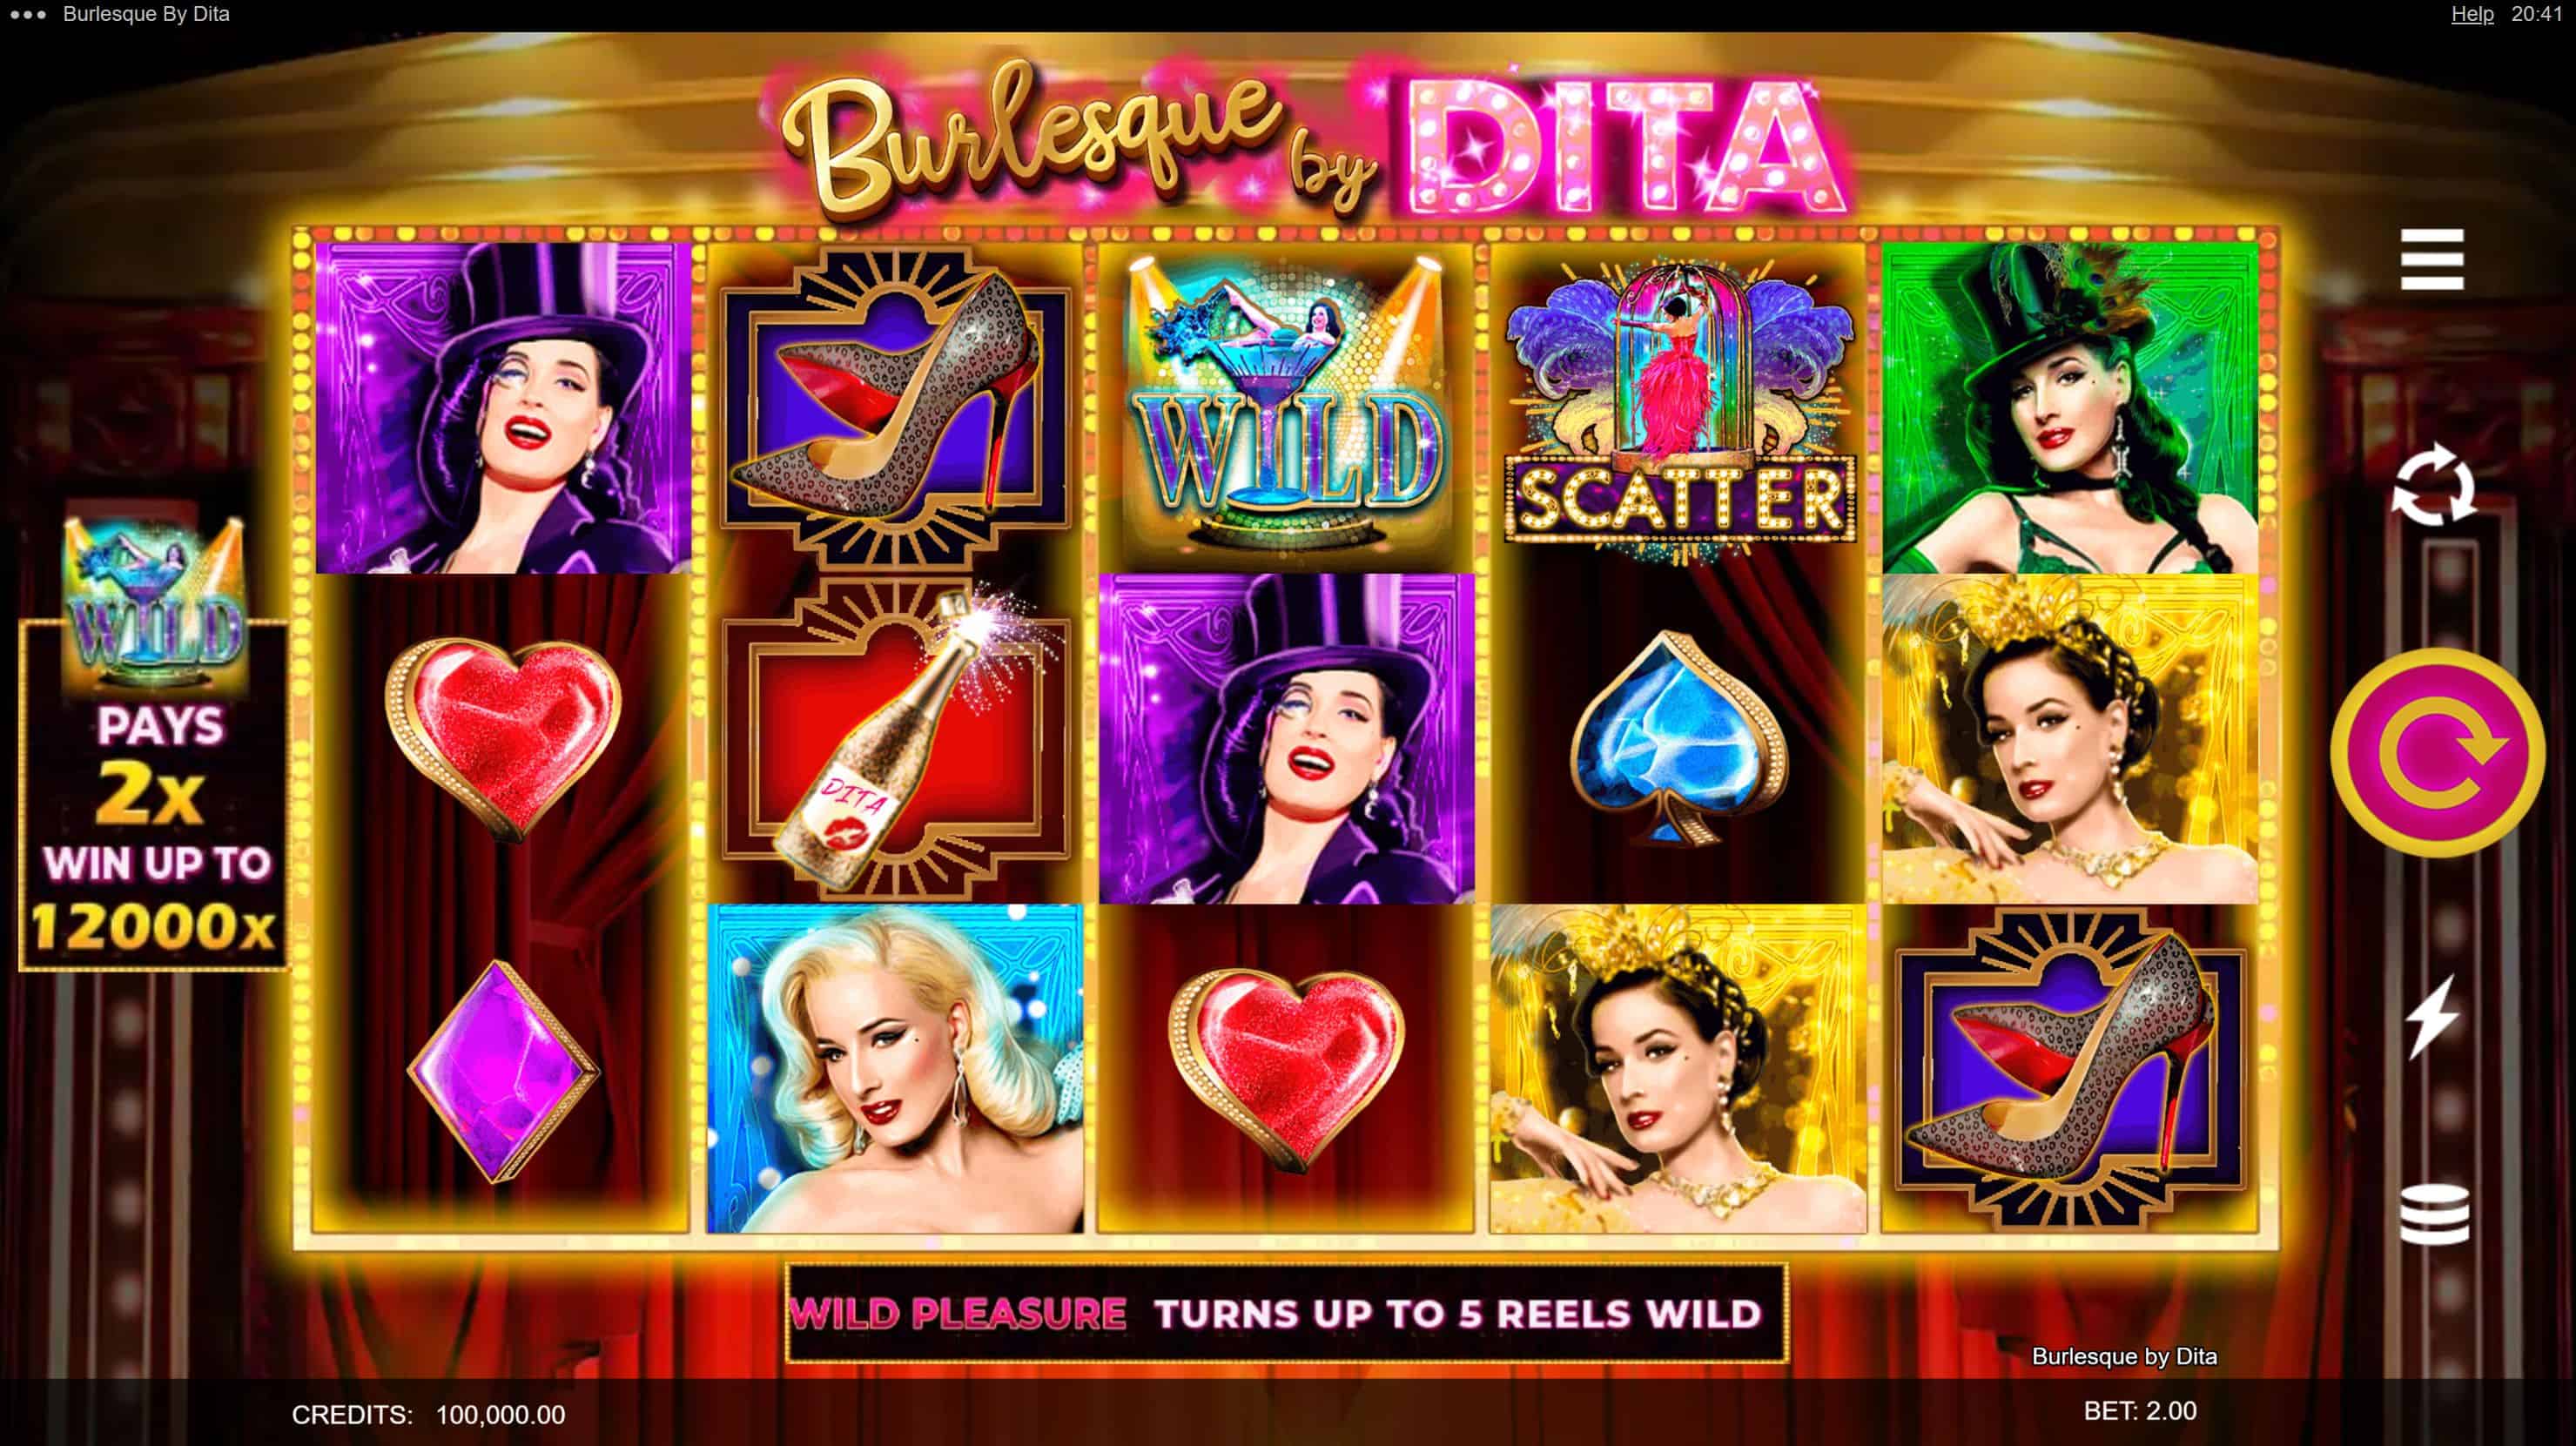 Burlesque by Dita Slot Game Free Play at Casino Ireland 01